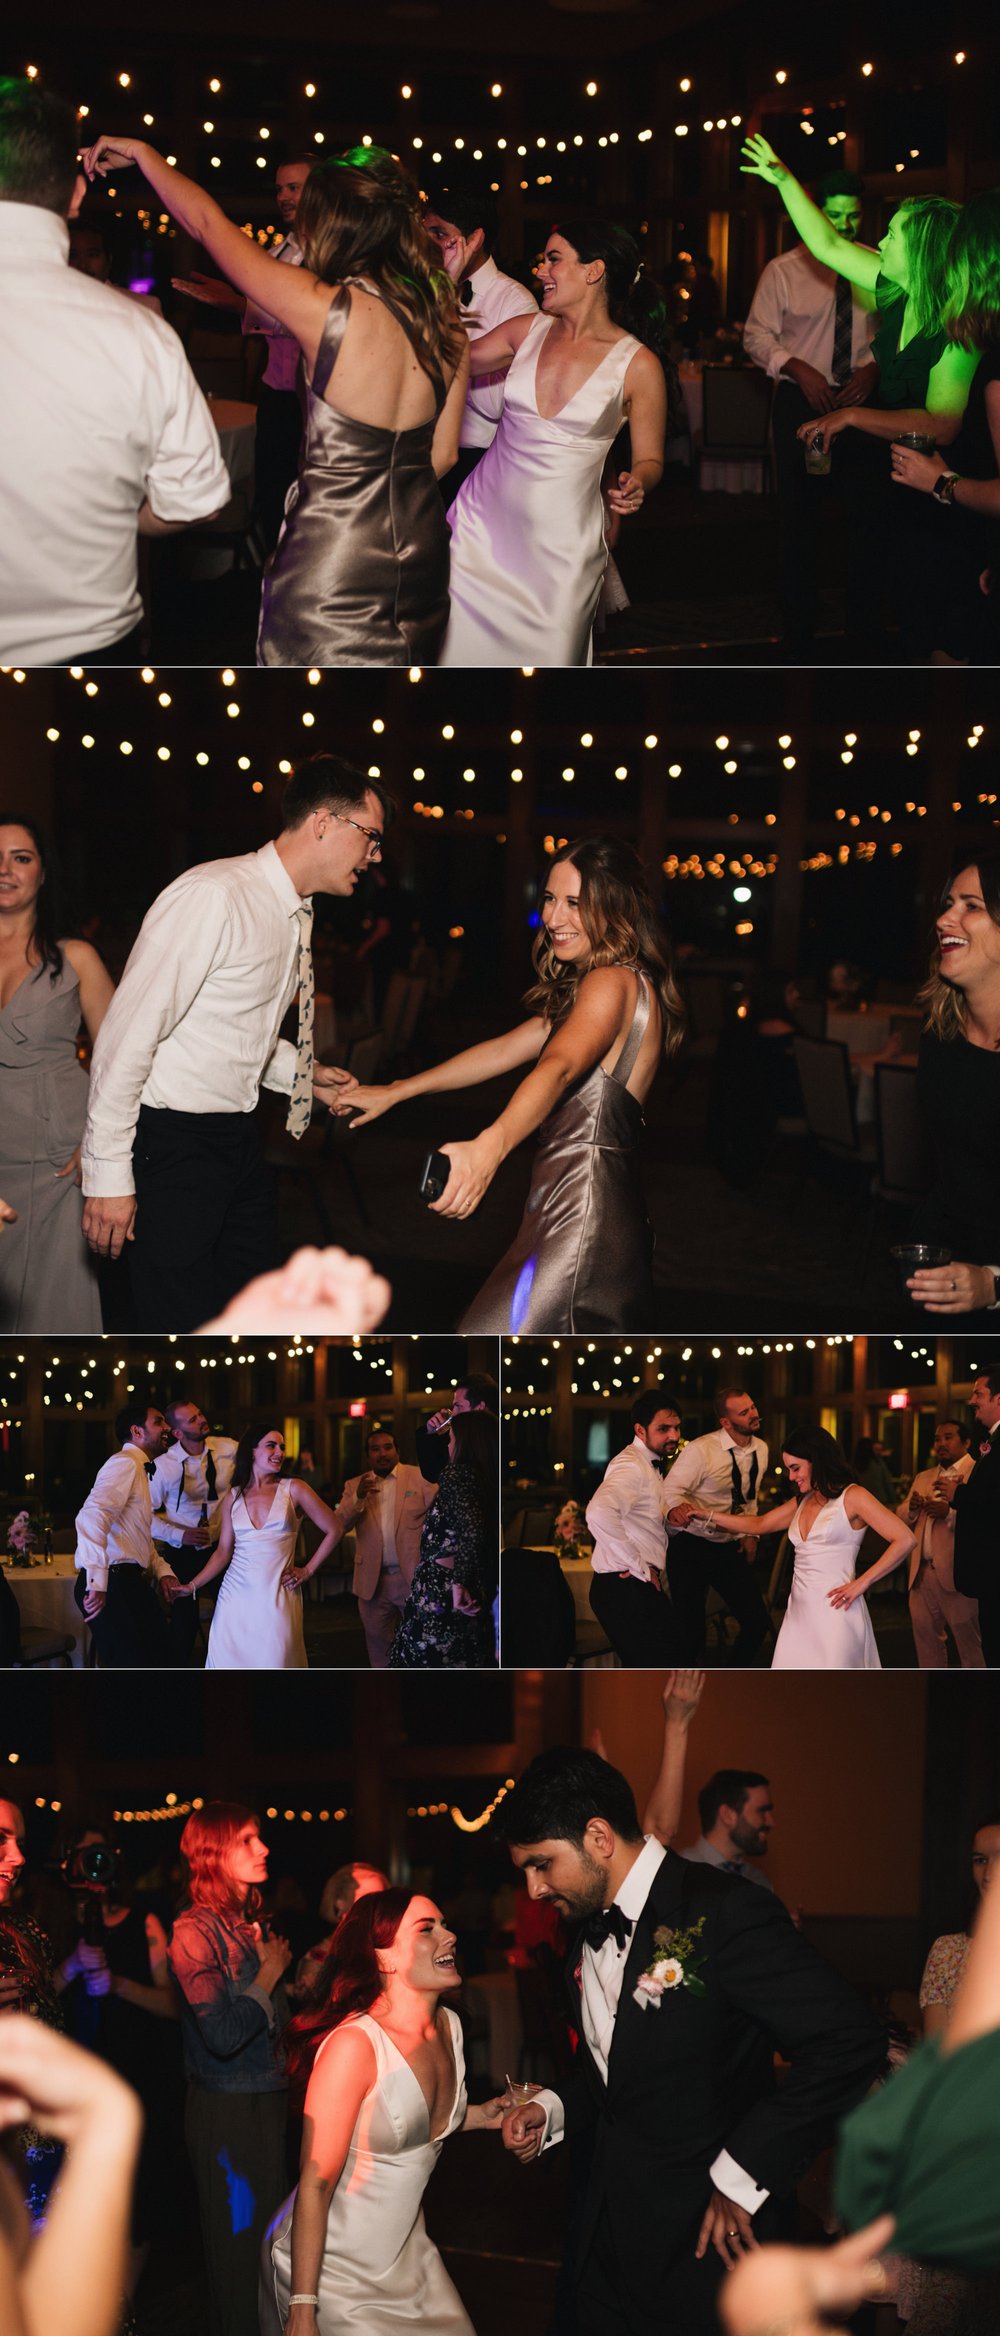 Gheens-Foundation-Lodge-Romantic-Garden-Wedding-By-Louisville-Kentucky-Wedding-Photographer-Sarah-Katherine-Davis-Photography-florals-reception-dancing-2.jpg